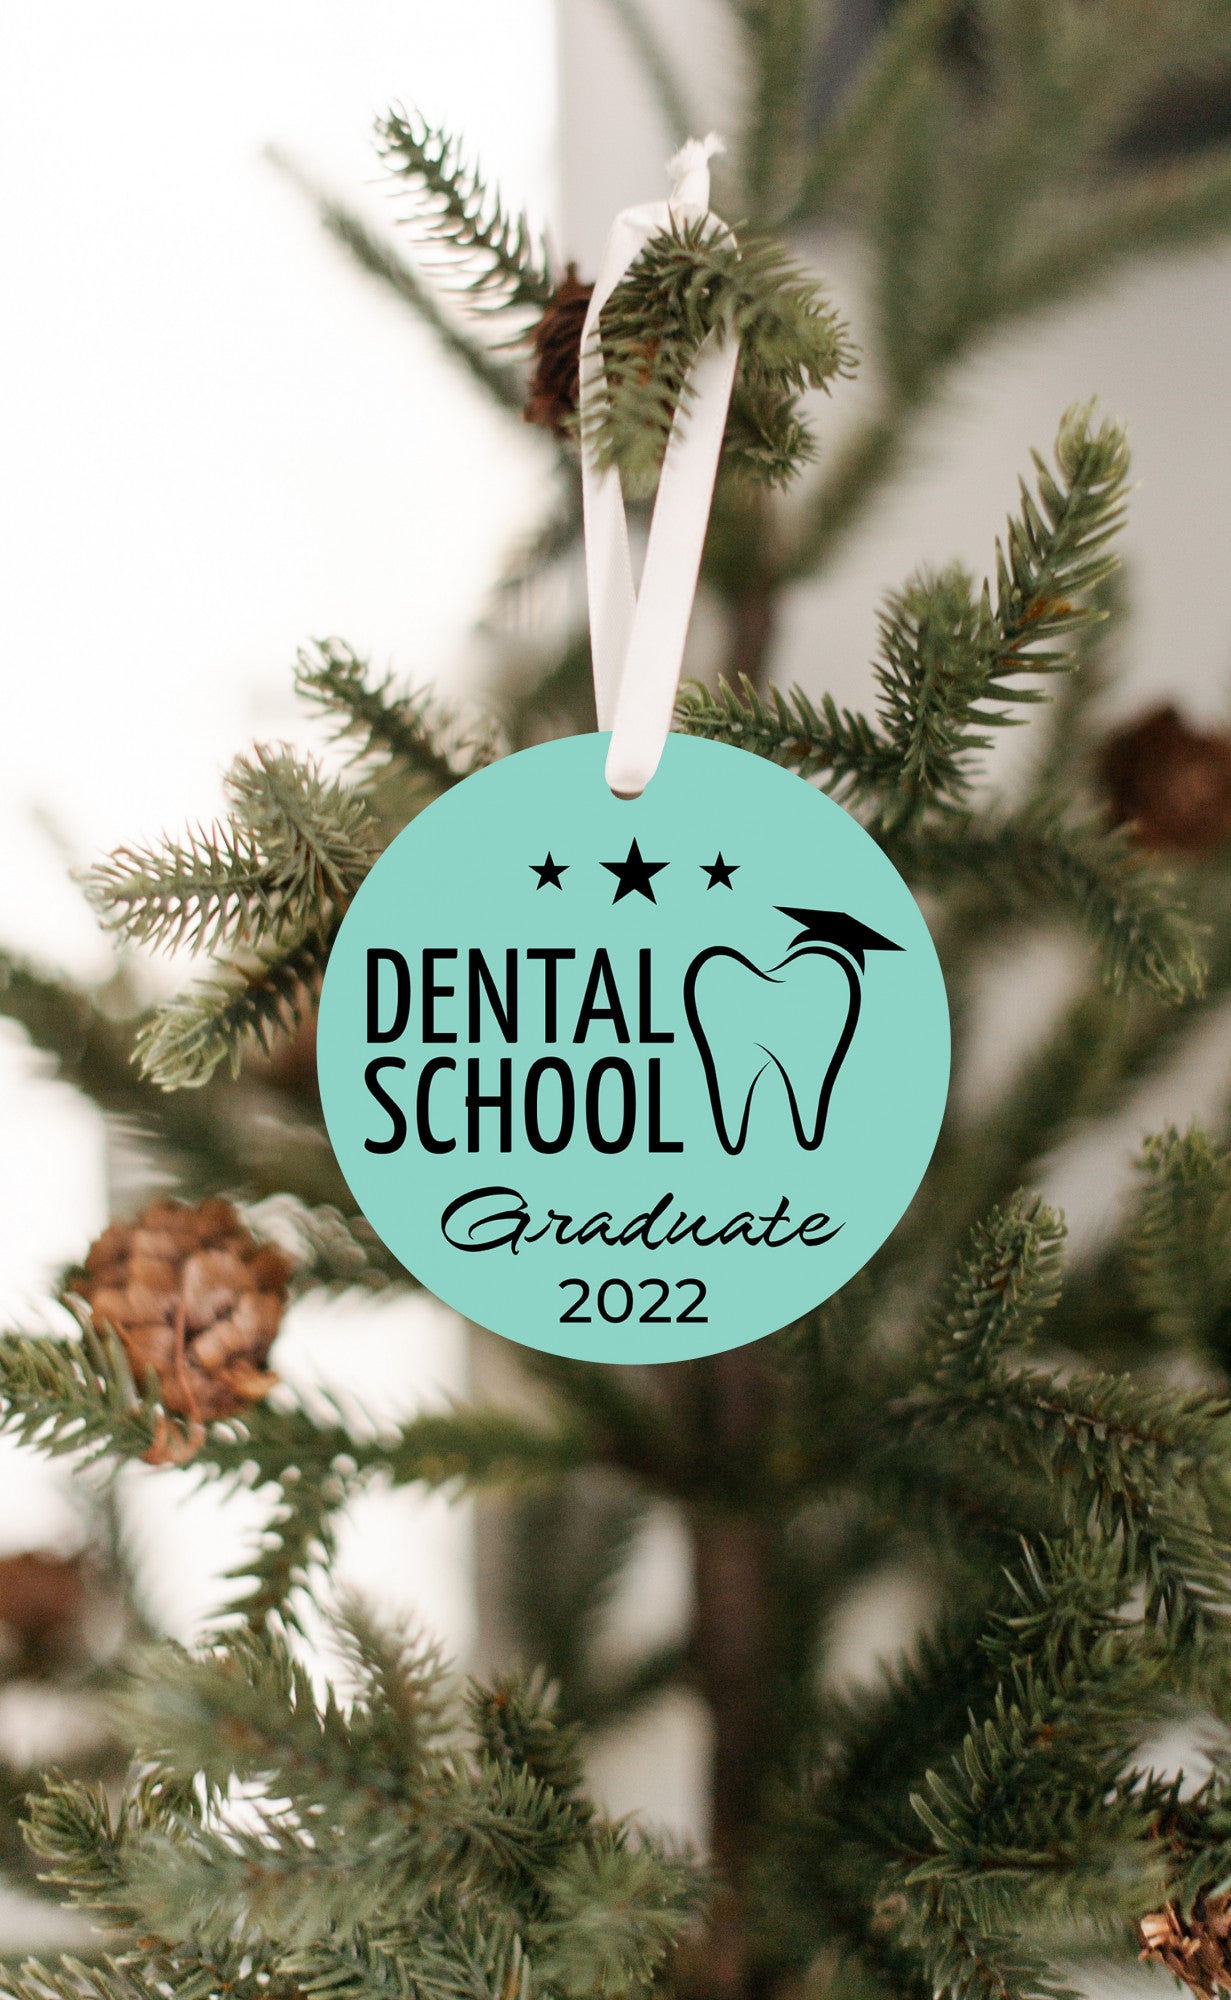 Dental School Graduate 2022 Ornament